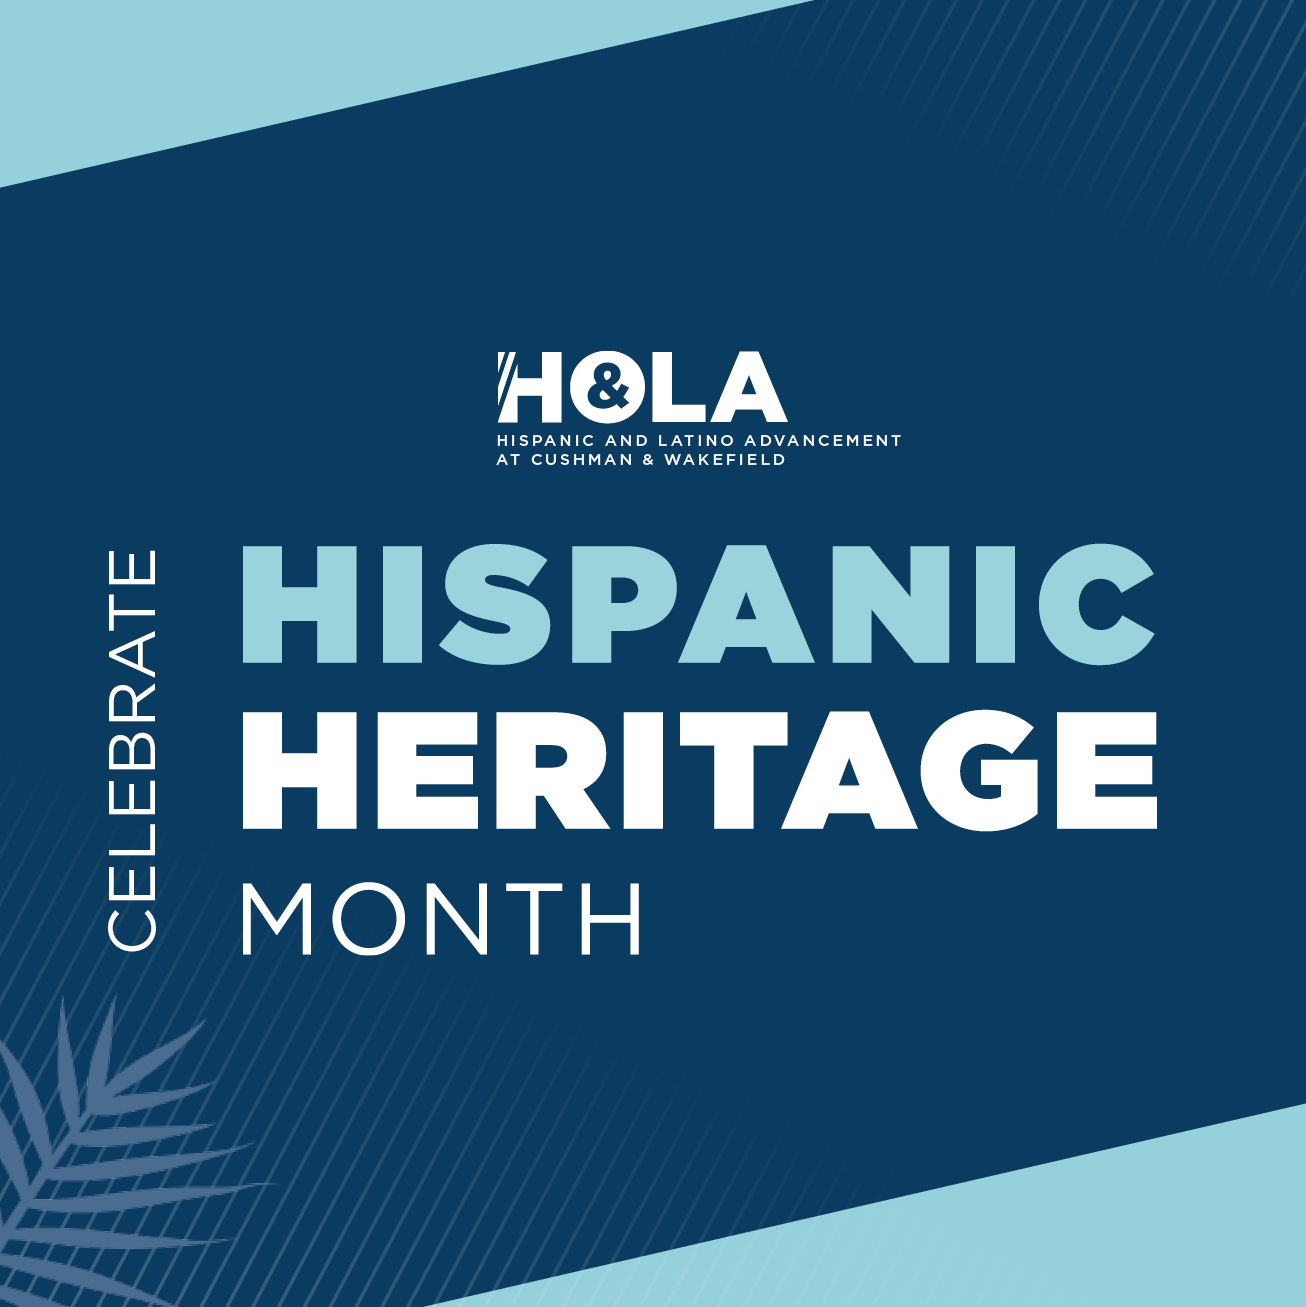 Square banner with text "HOLA (Hispanic & Latino Advancement) at Cushman & Wakefield celebrates Hispanic Heritage Month"